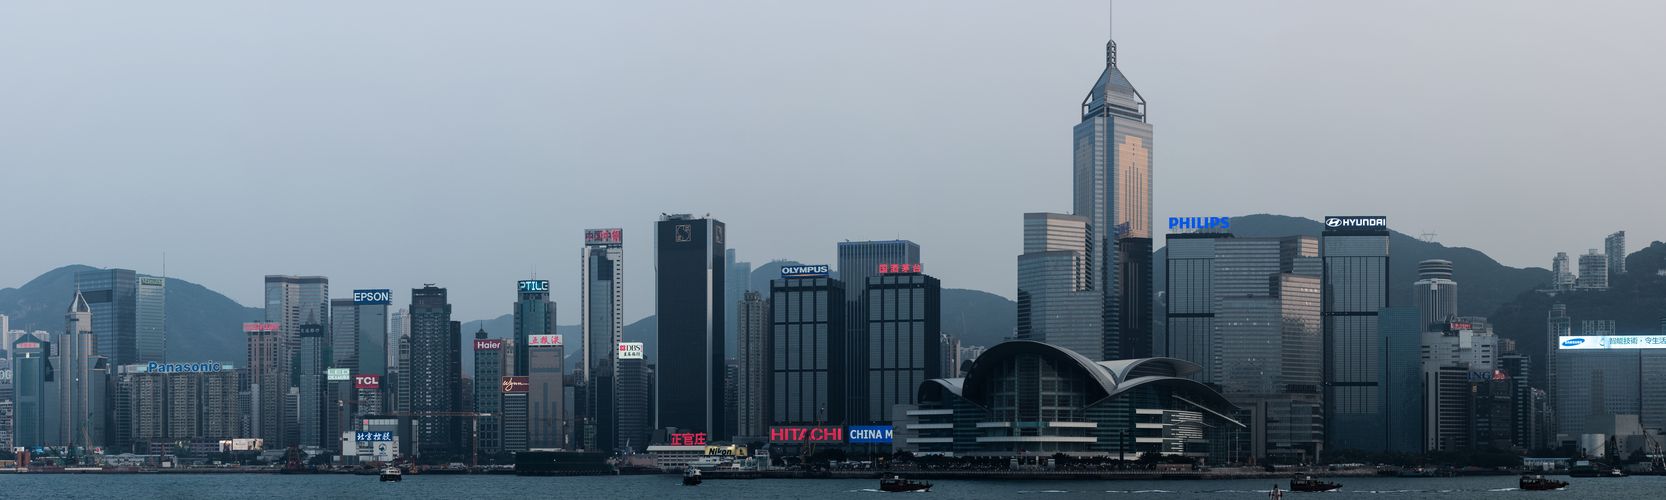 Hong Kong Skyline Panorama I